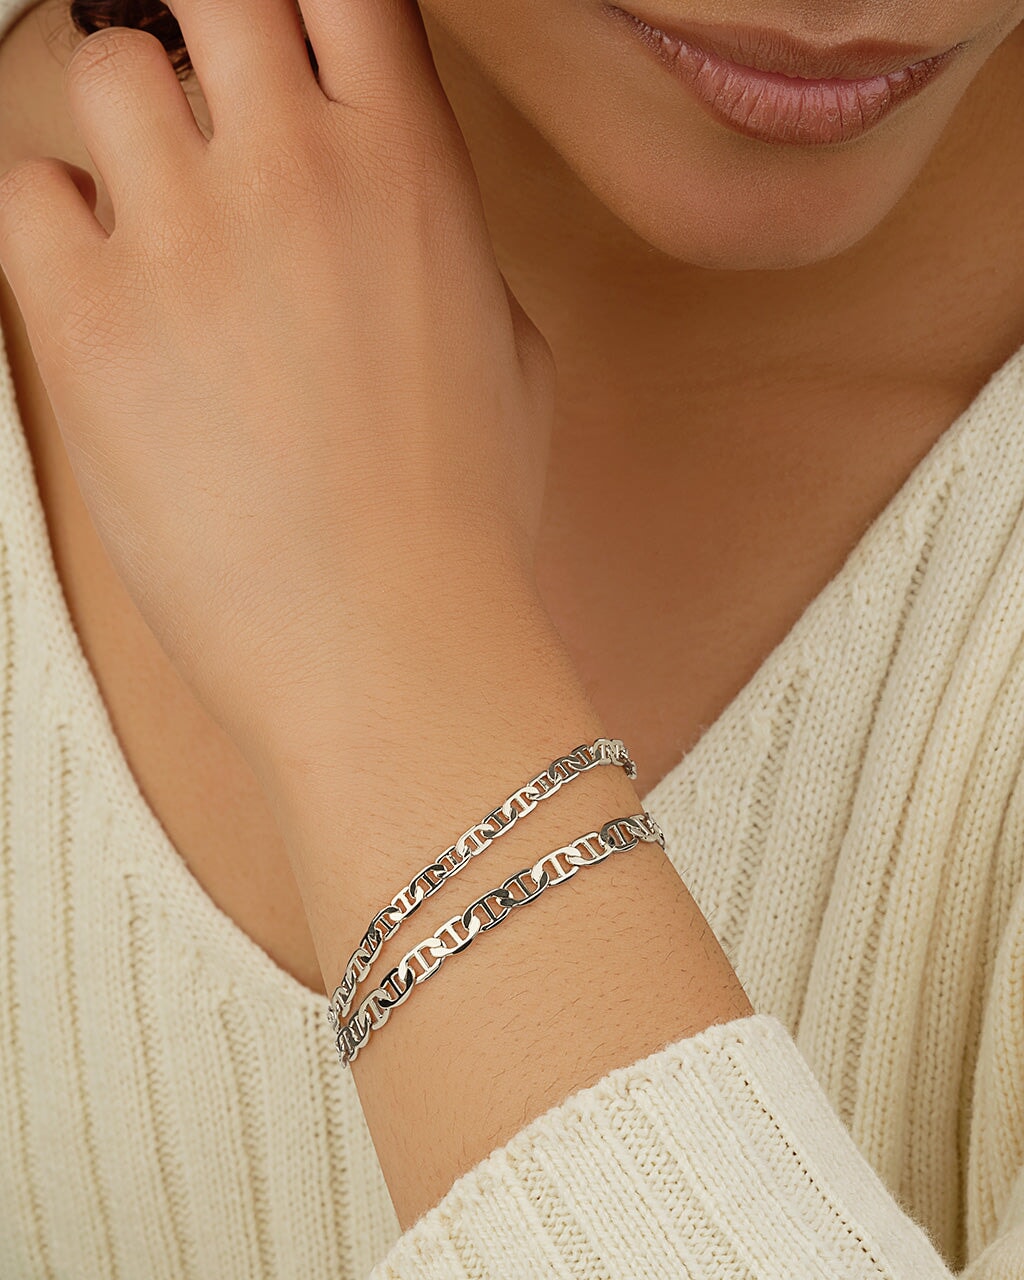 Anchor Chain Bracelet Set of 2